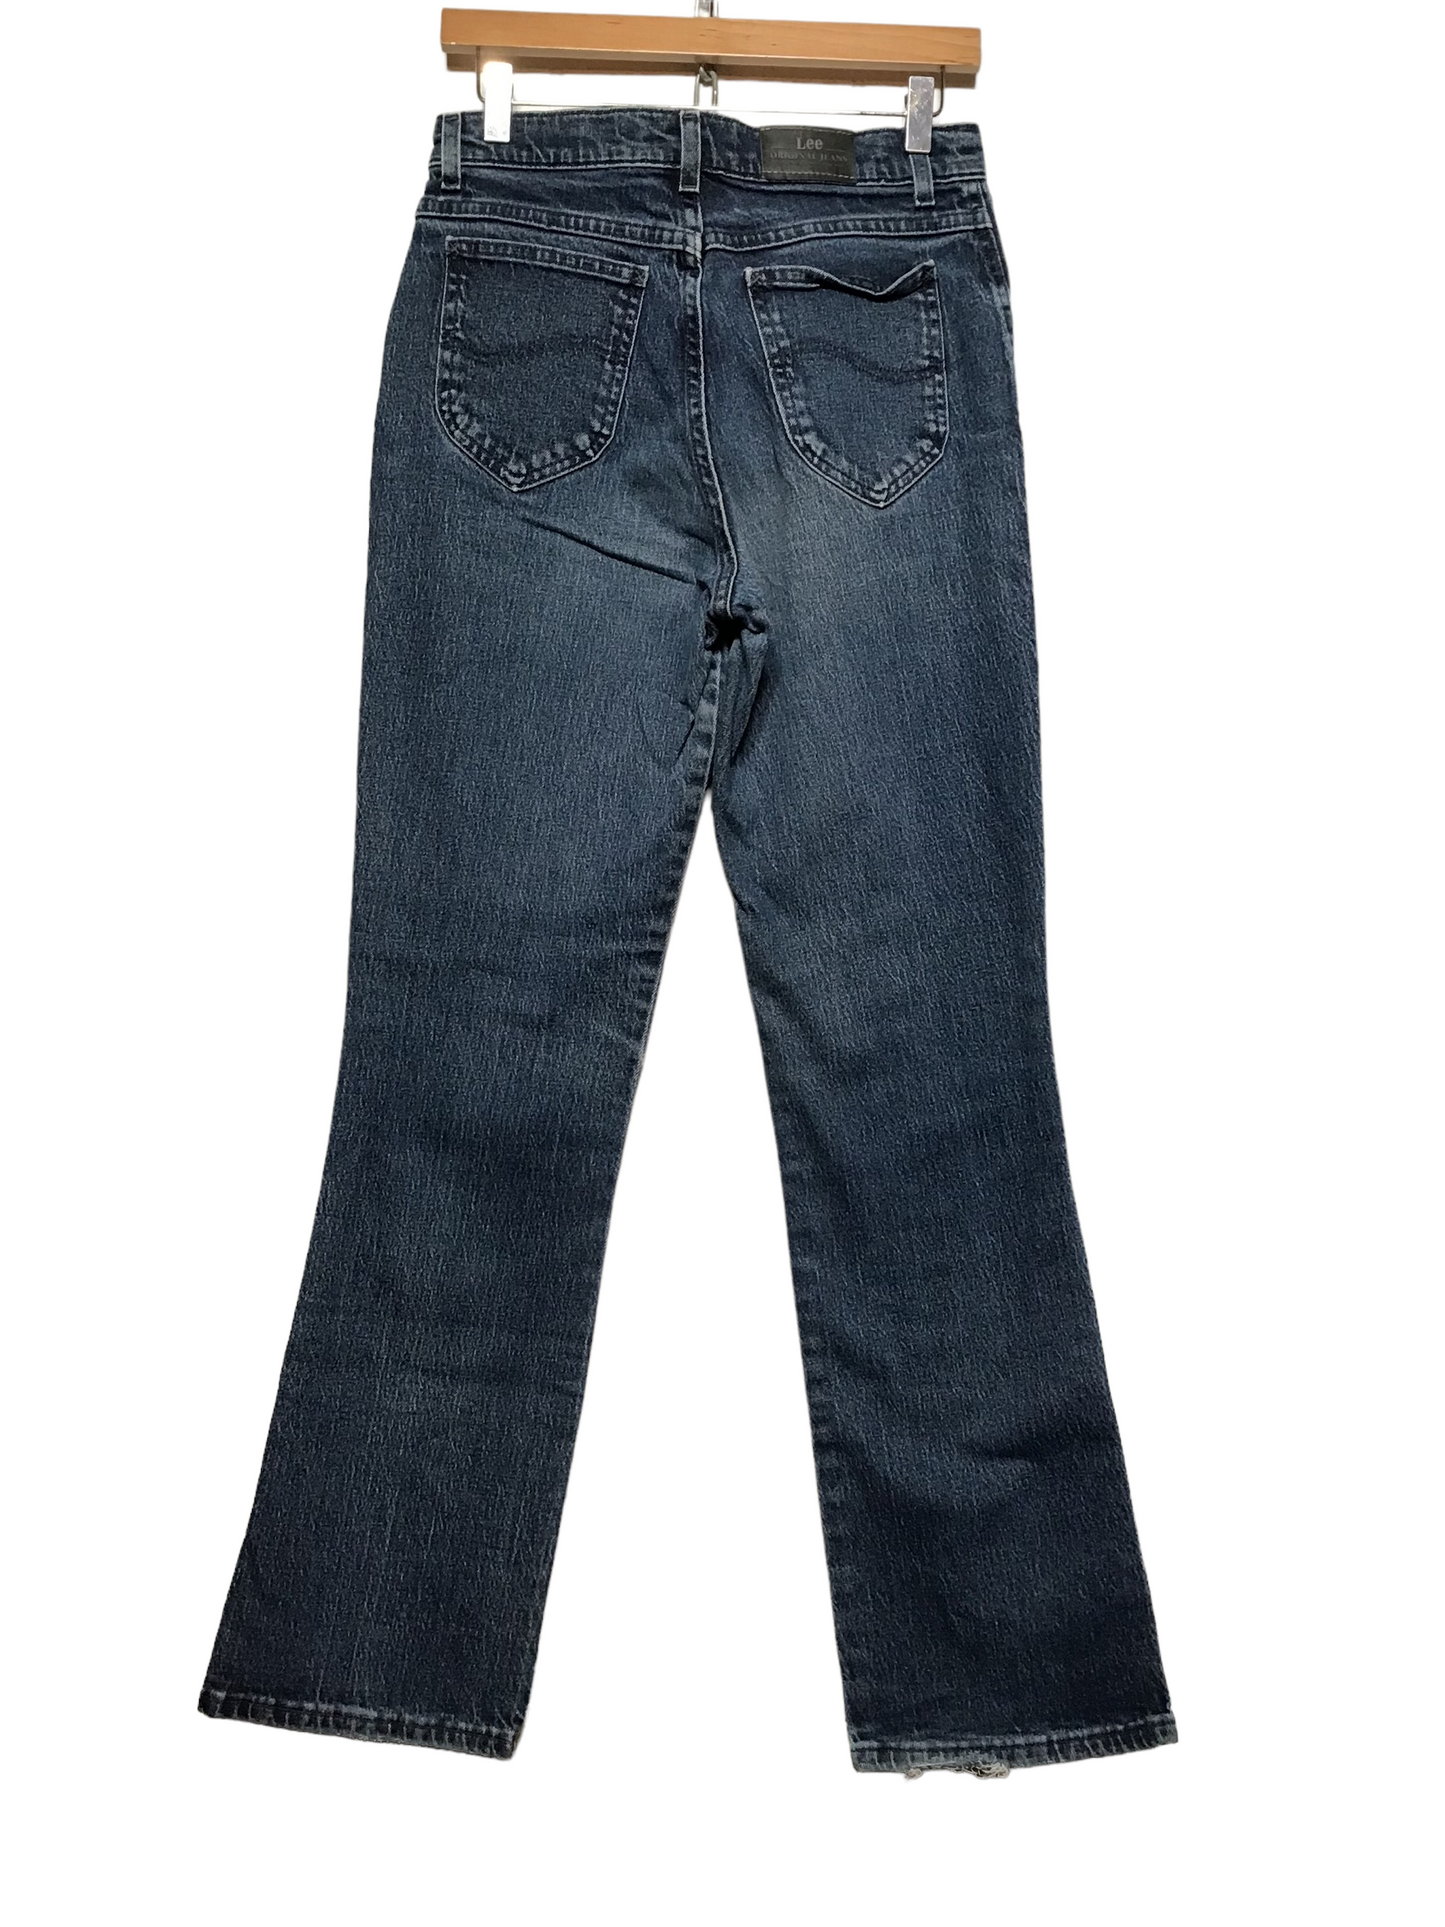 Lee Dark Denim Jeans (28X31)